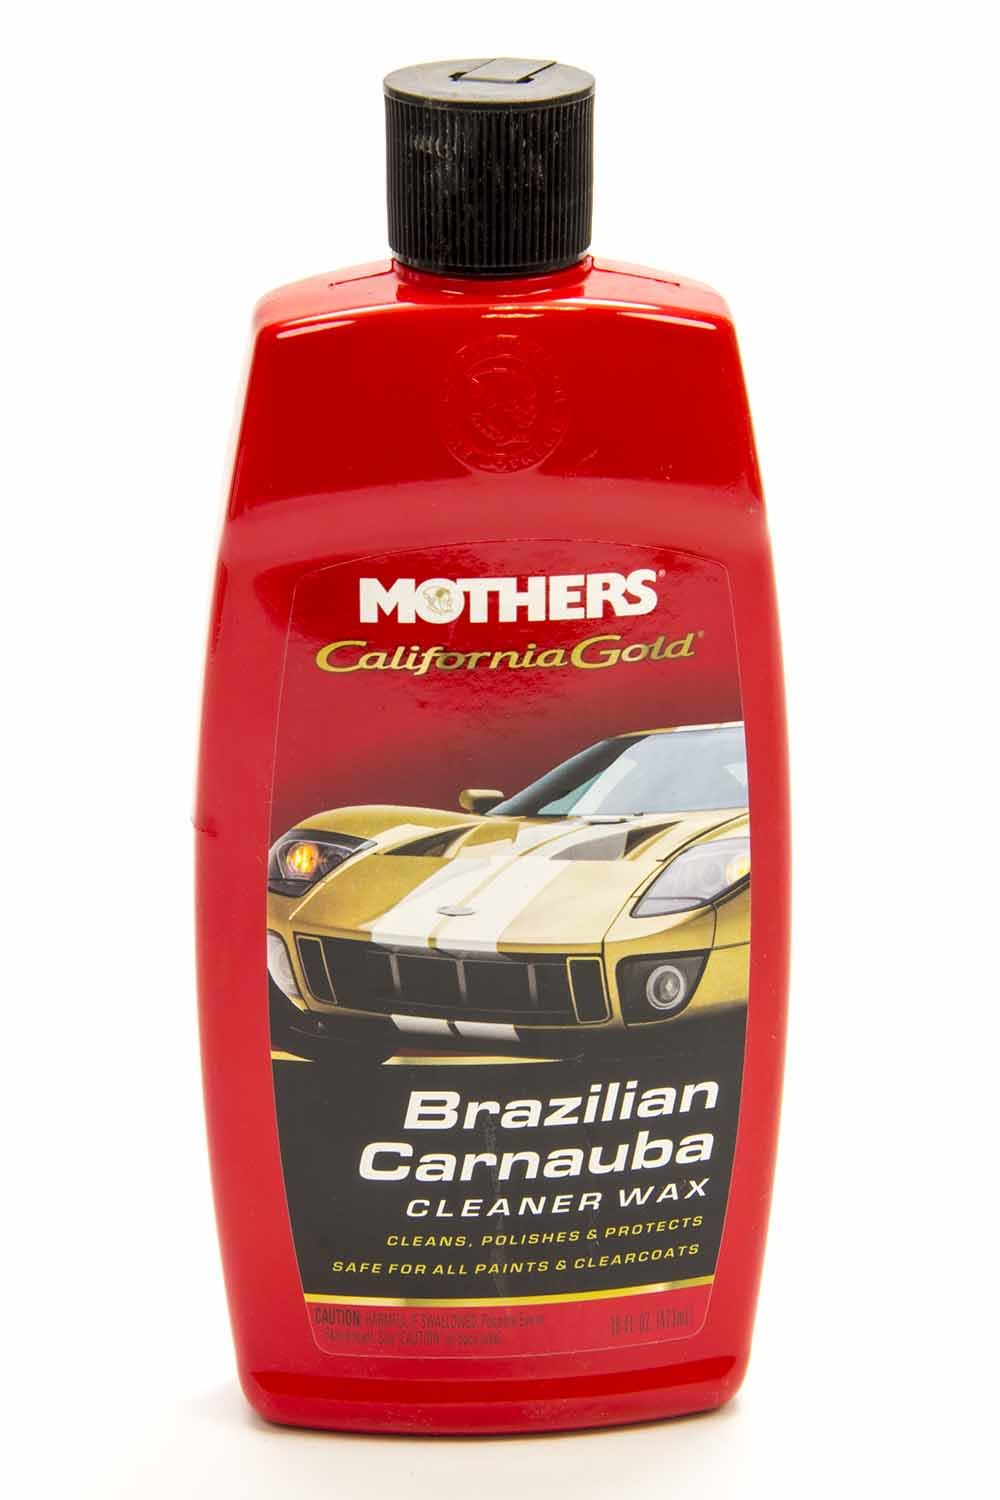 MOTHERS Cream Wax, California Gold Brazilian Carnauba, 16.00 oz Bottle, Each